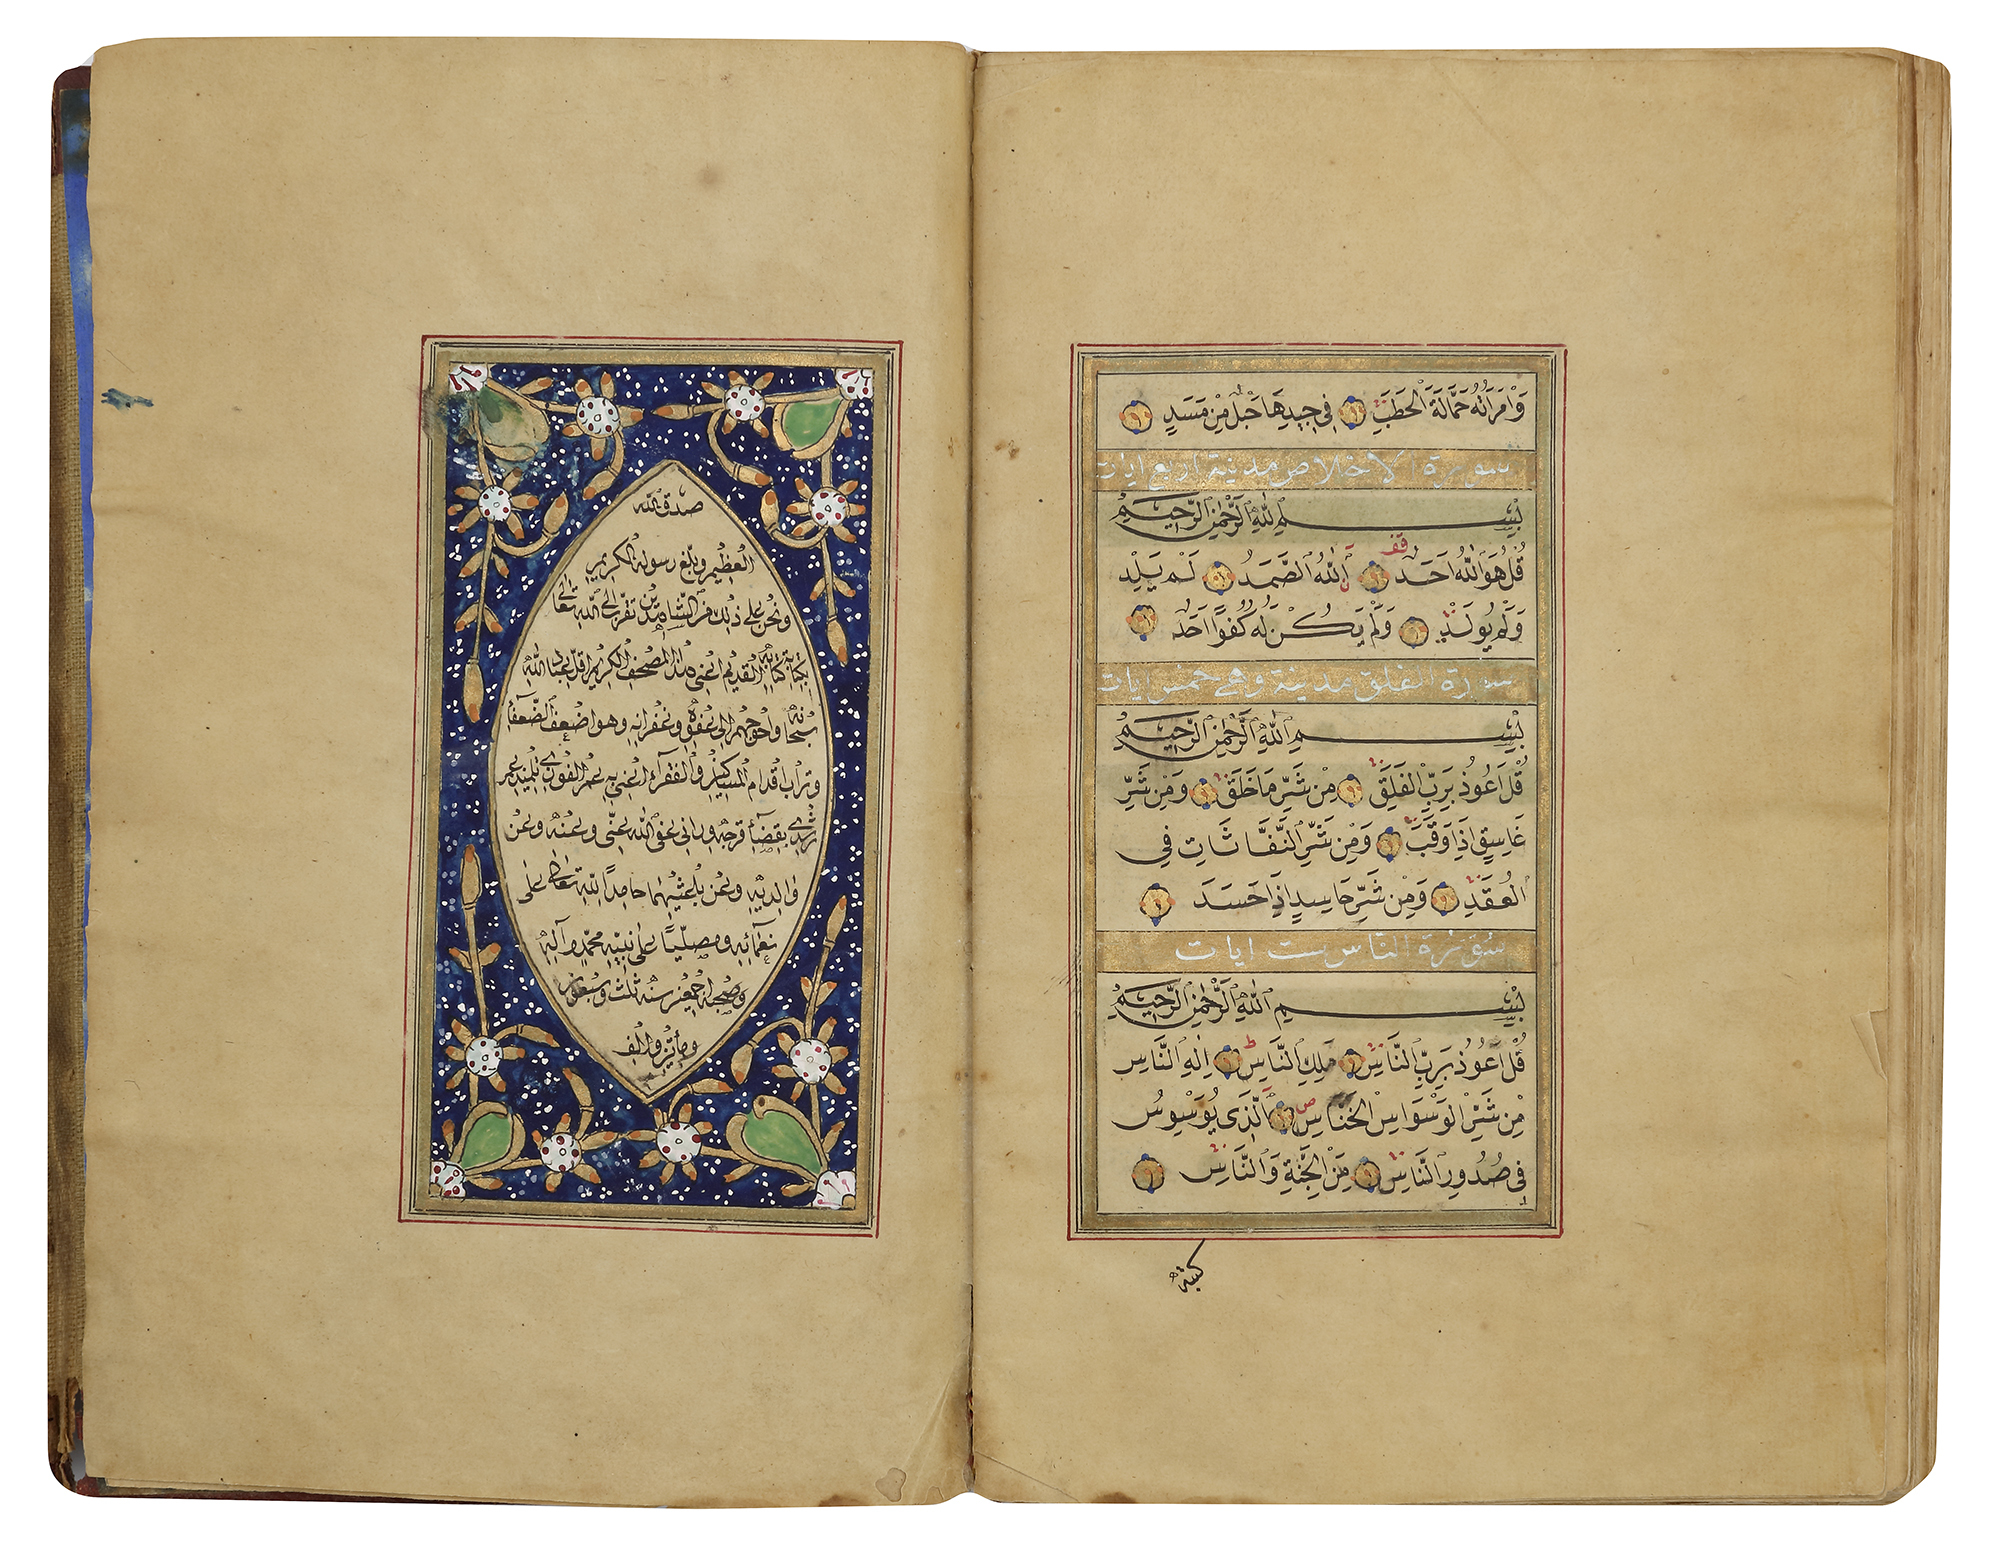 A FINE OTTOMAN QURAN, TURKEY, WRITTEN BY OMAR AL-FAWRABI STUDENT OF OMAR RUSHDI, DATED 1273 AH/1856 - Image 10 of 20